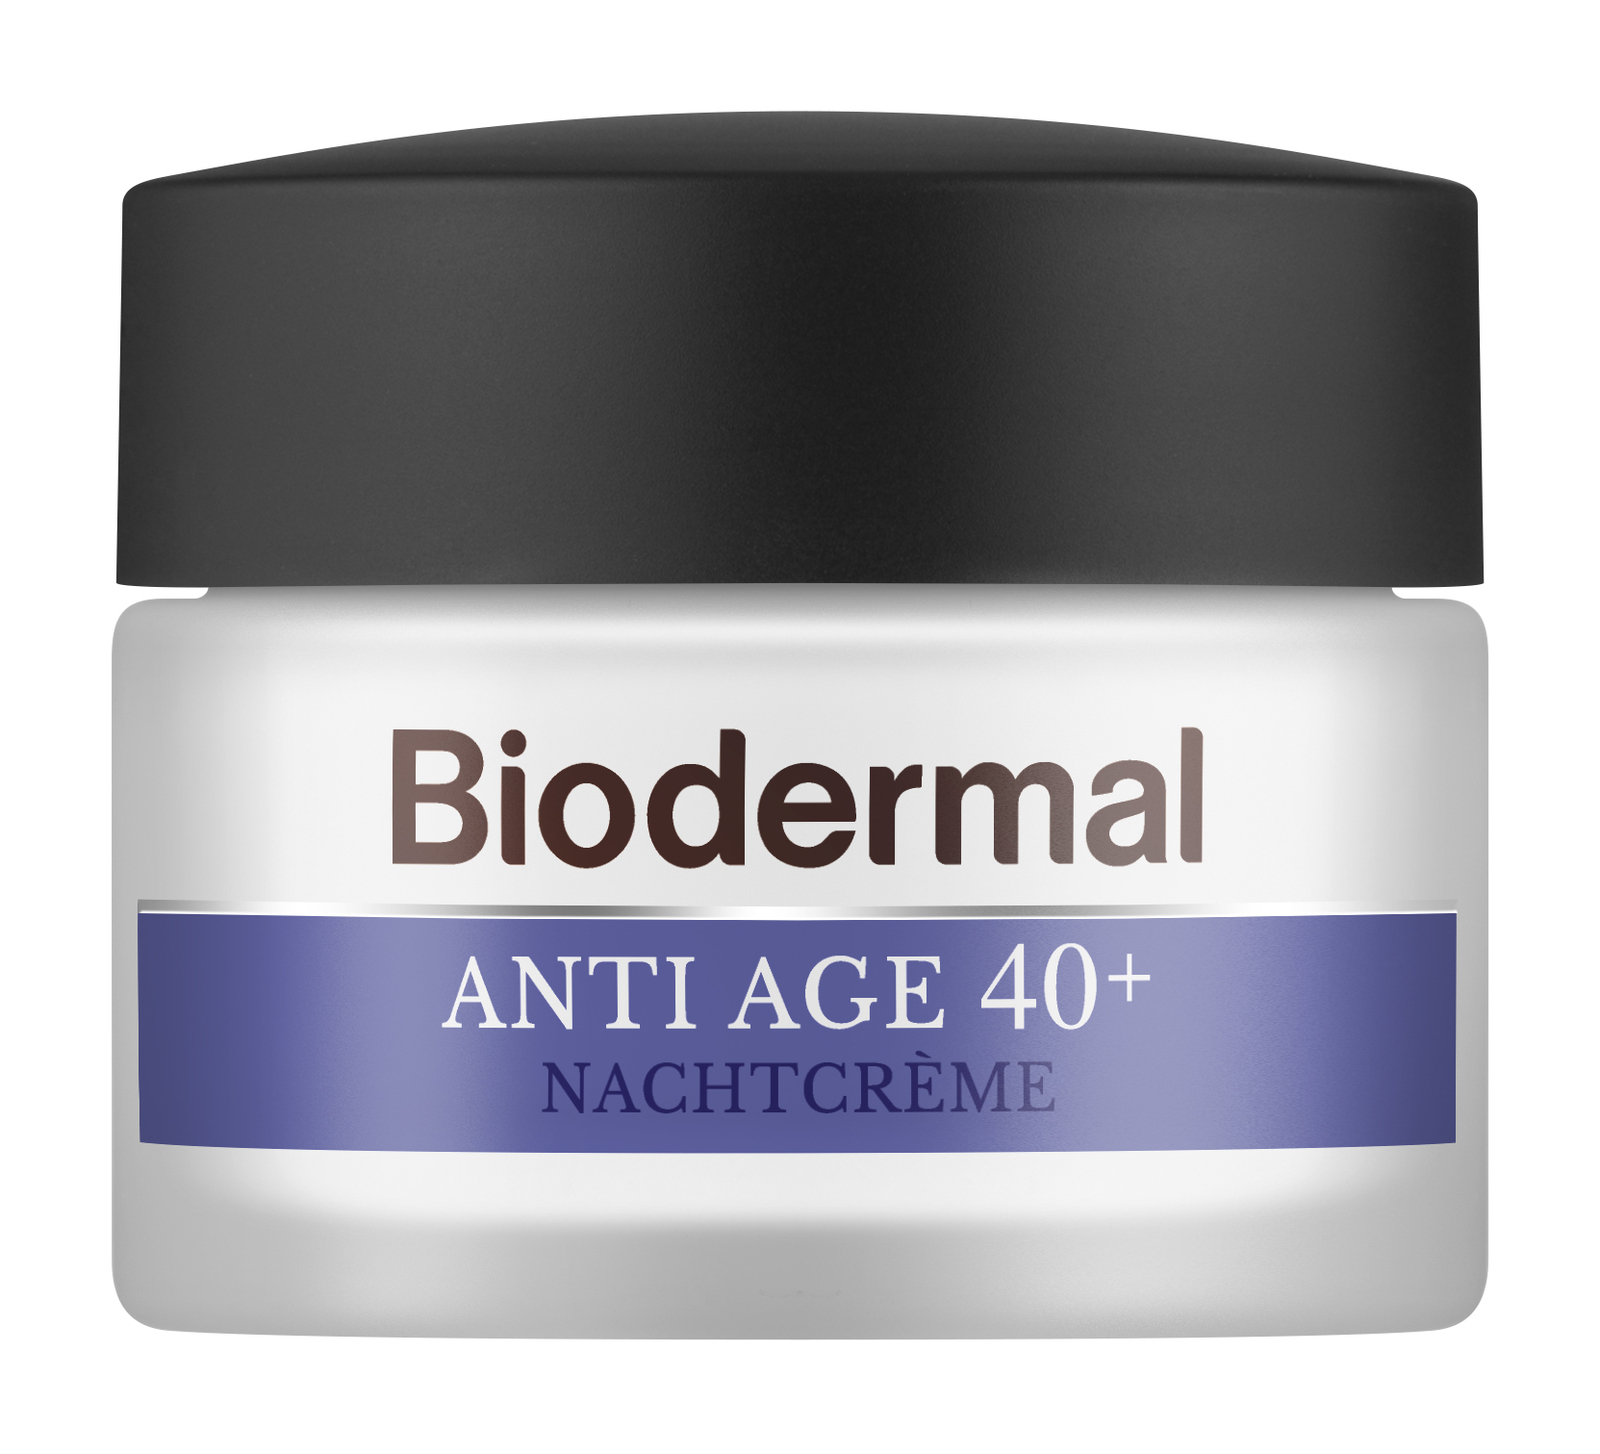 Biodermal Anti Age Nachtcreme 40+ met niacinamide & peptide